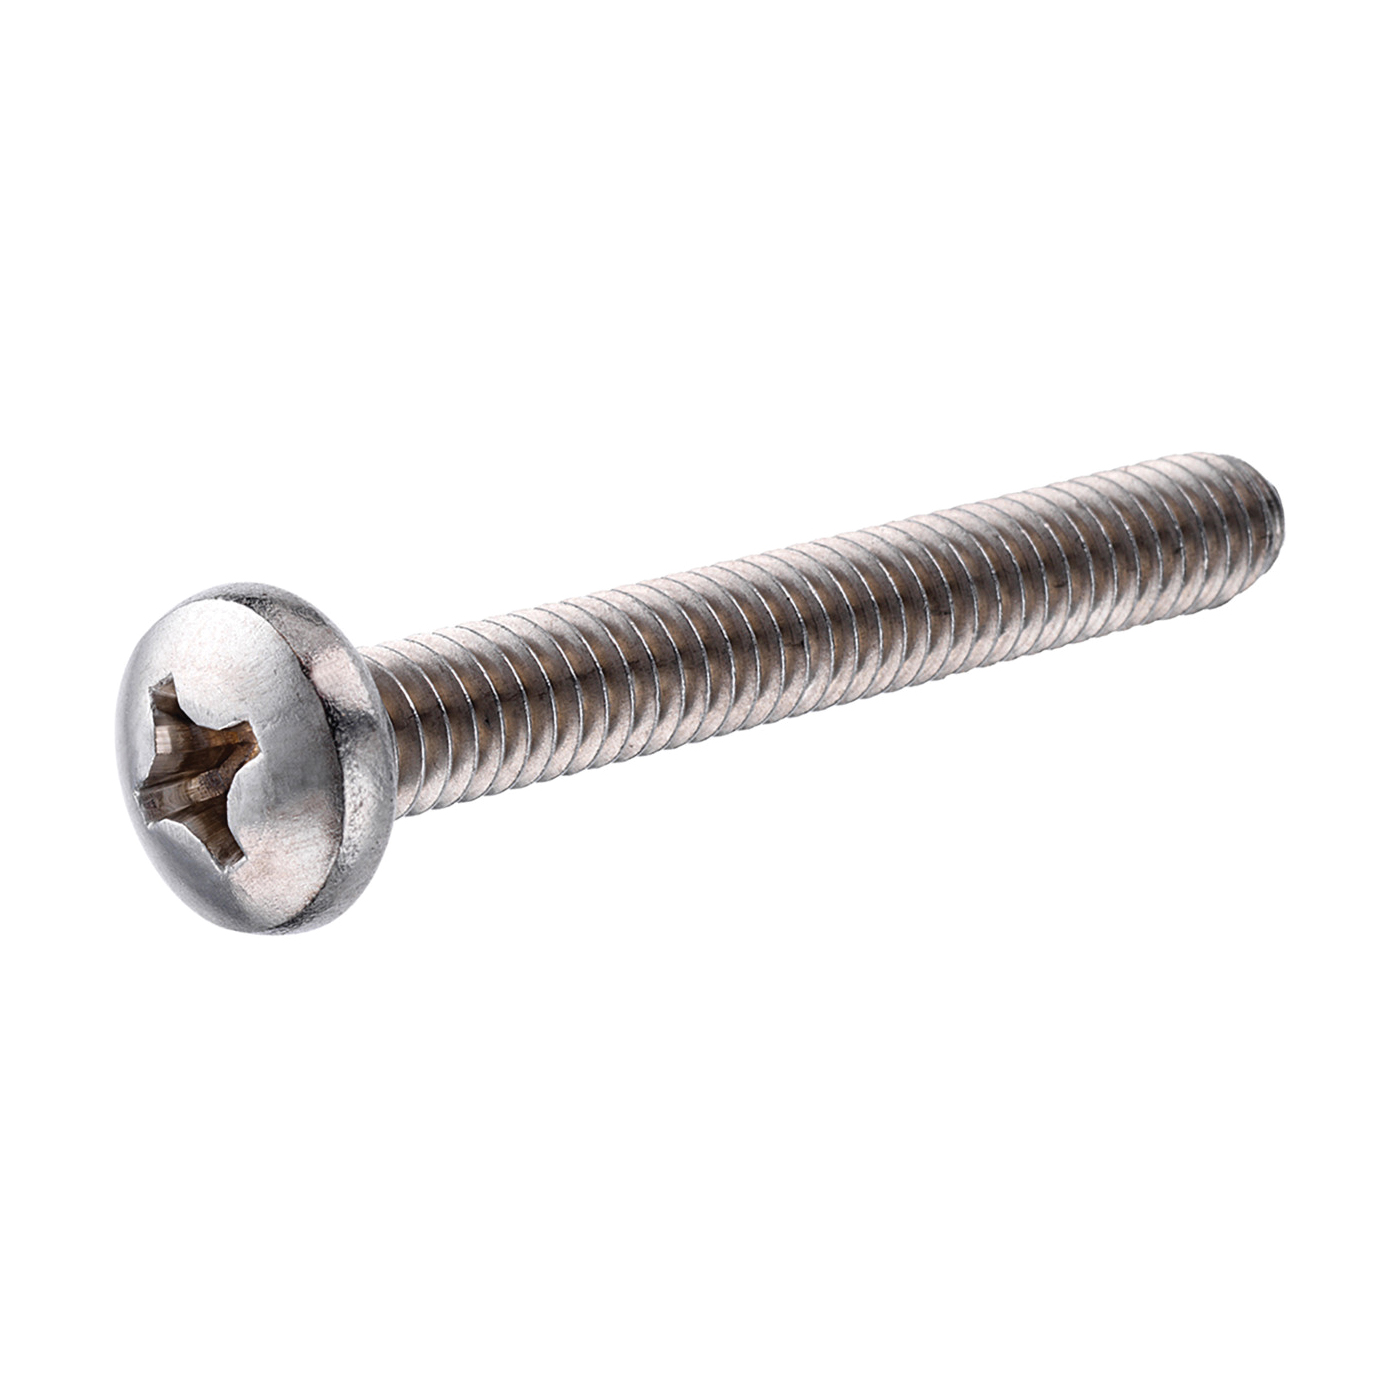 881137 Machine Screw, #2-56 Thread, 1/4 in L, Pan Head, Phillips Drive, Stainless Steel